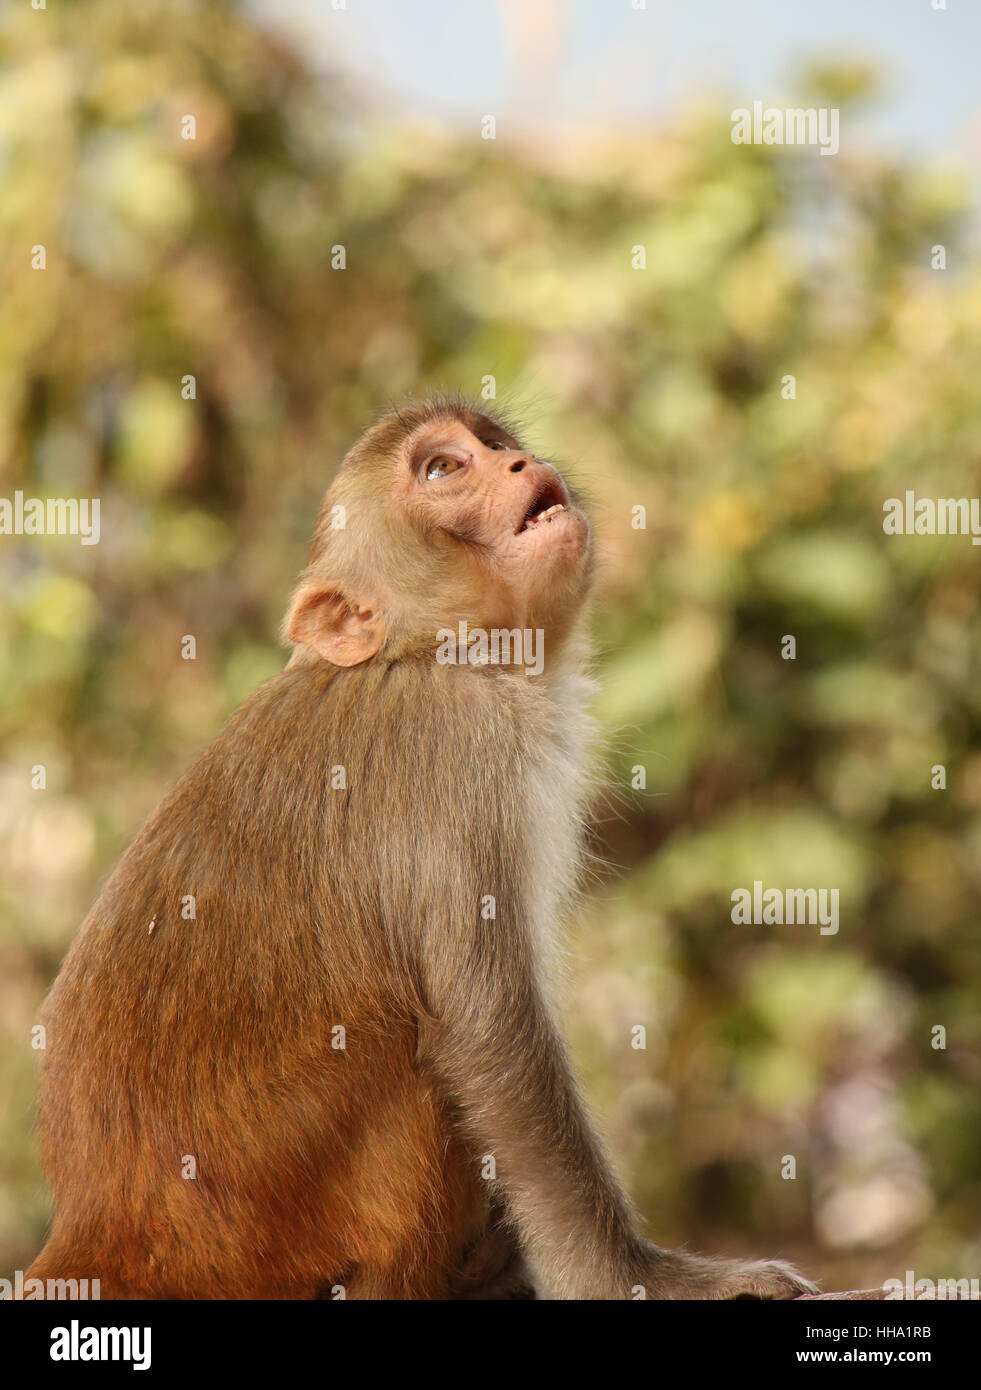 Surprised Monkey at the Swayambhu Nath temple, Kathmandu, Nepal. Stock Photo